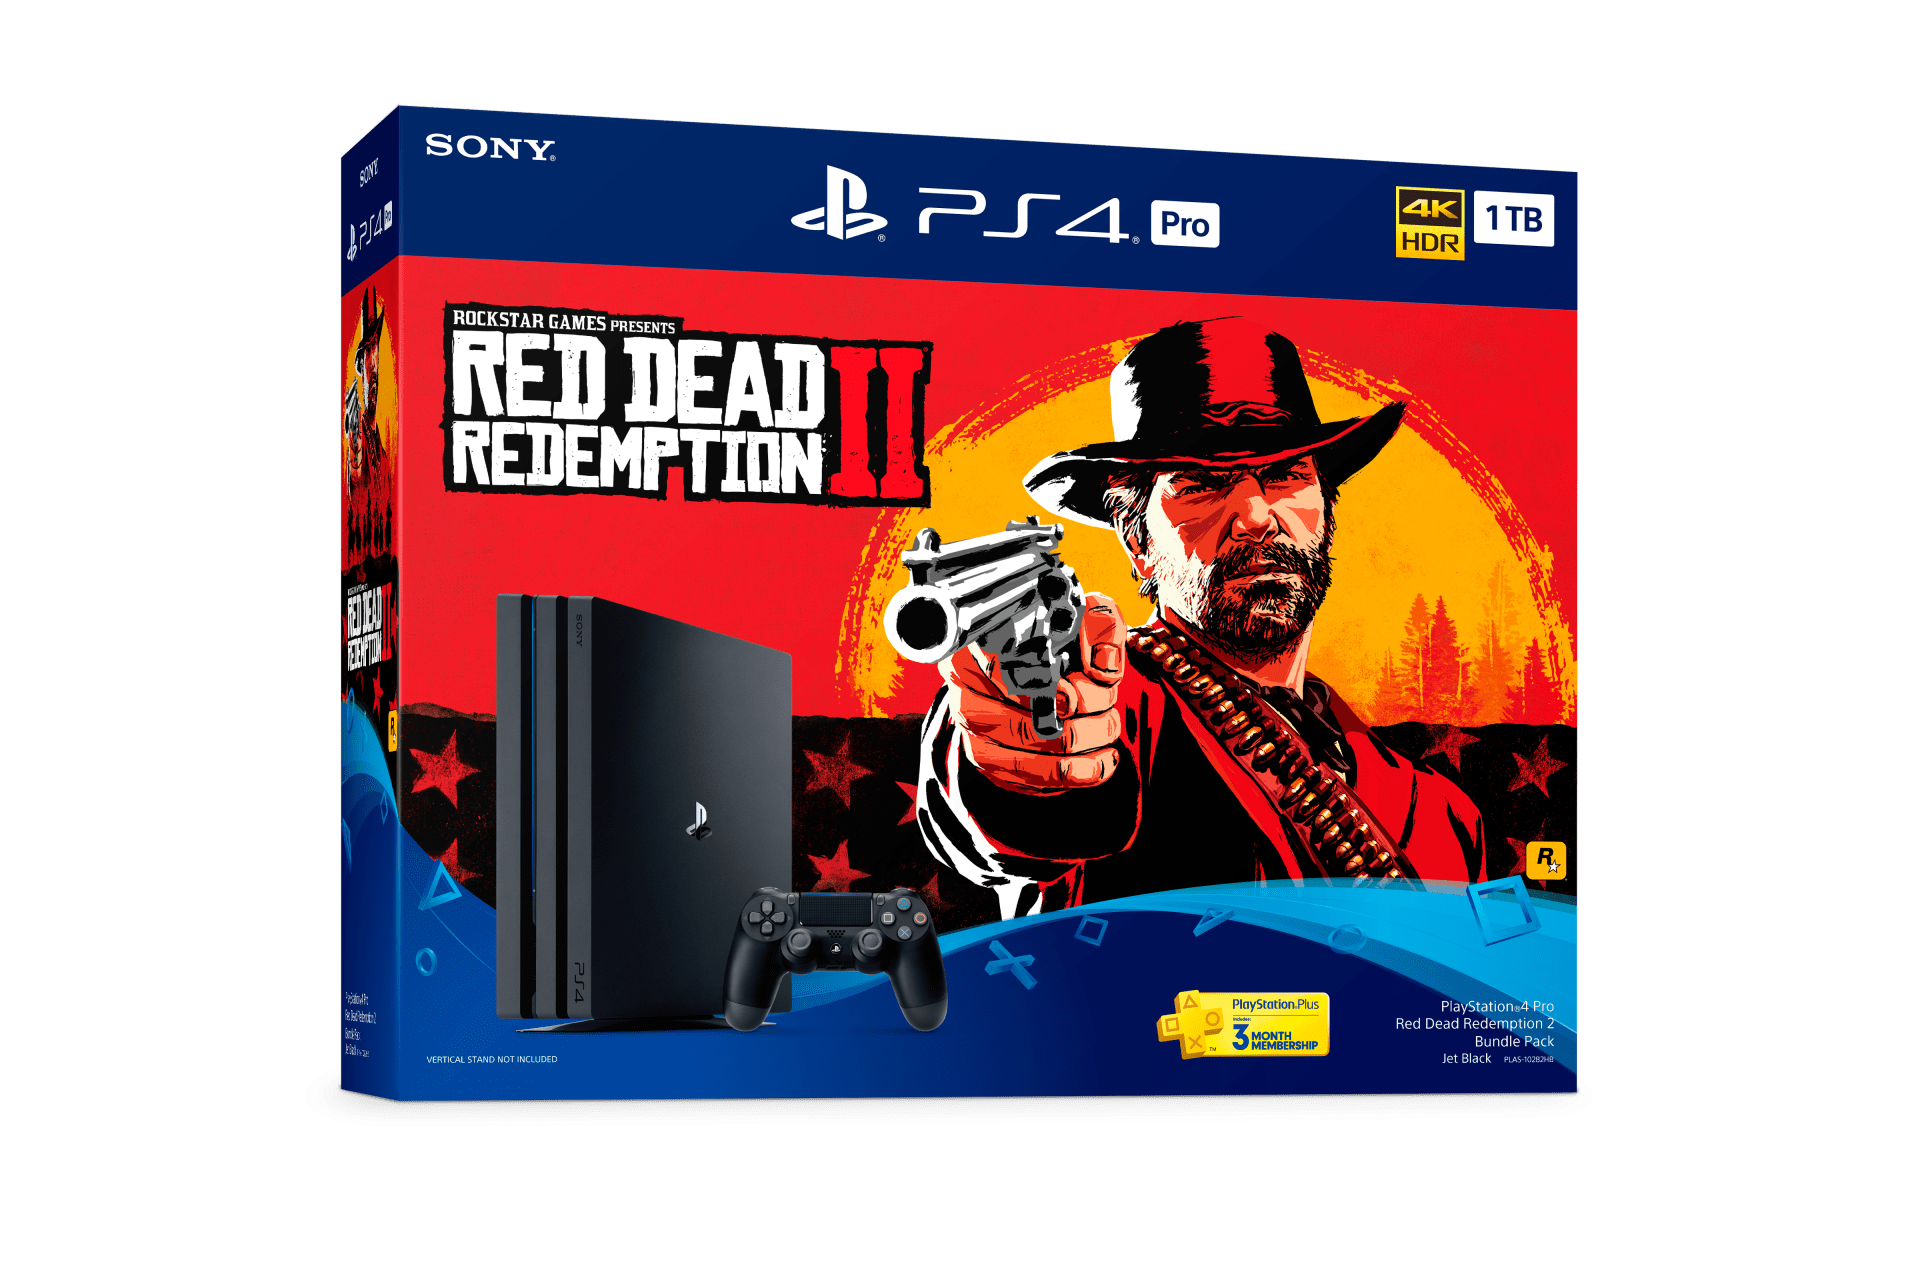 Red redemption 2 купить ps4. Sony PLAYSTATION 4 Pro 1tb rdr2. Ред дед редемпшн на ps4. Sony PLAYSTATION 4 Slim Red Dead Redemption 2. Red Dead Redemption 2 PLAYSTATION.